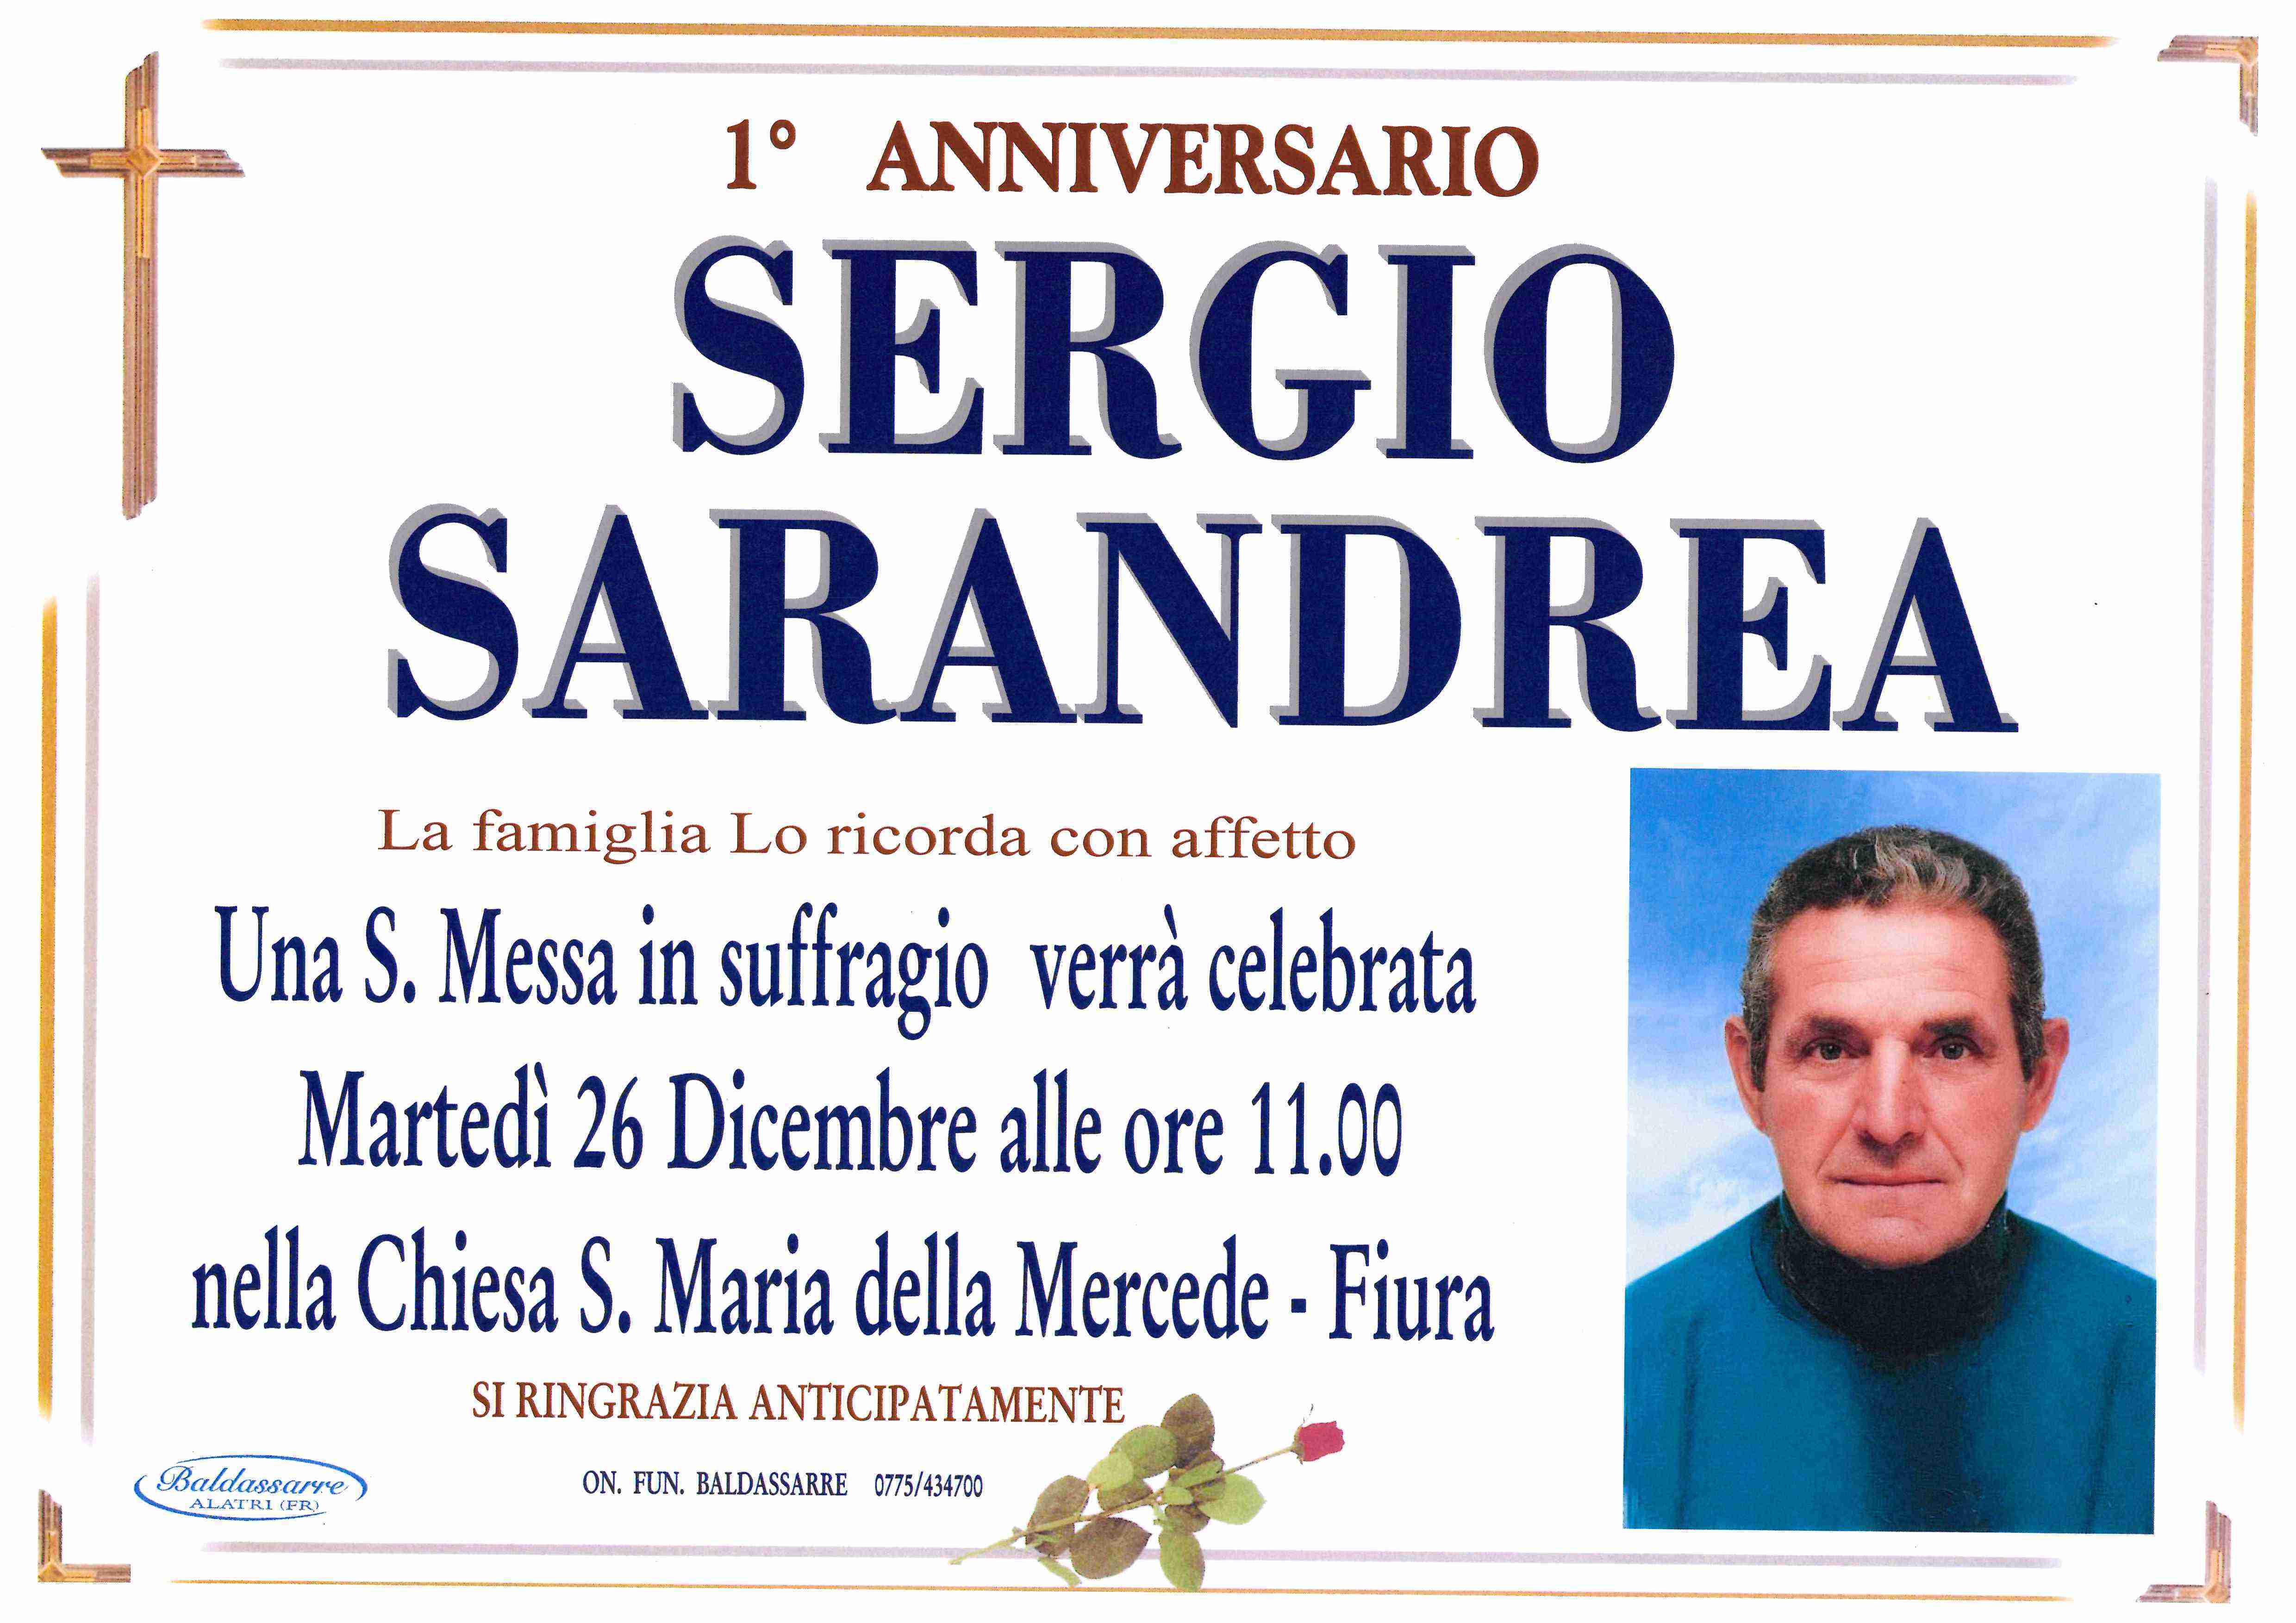 Sergio Sarandrea